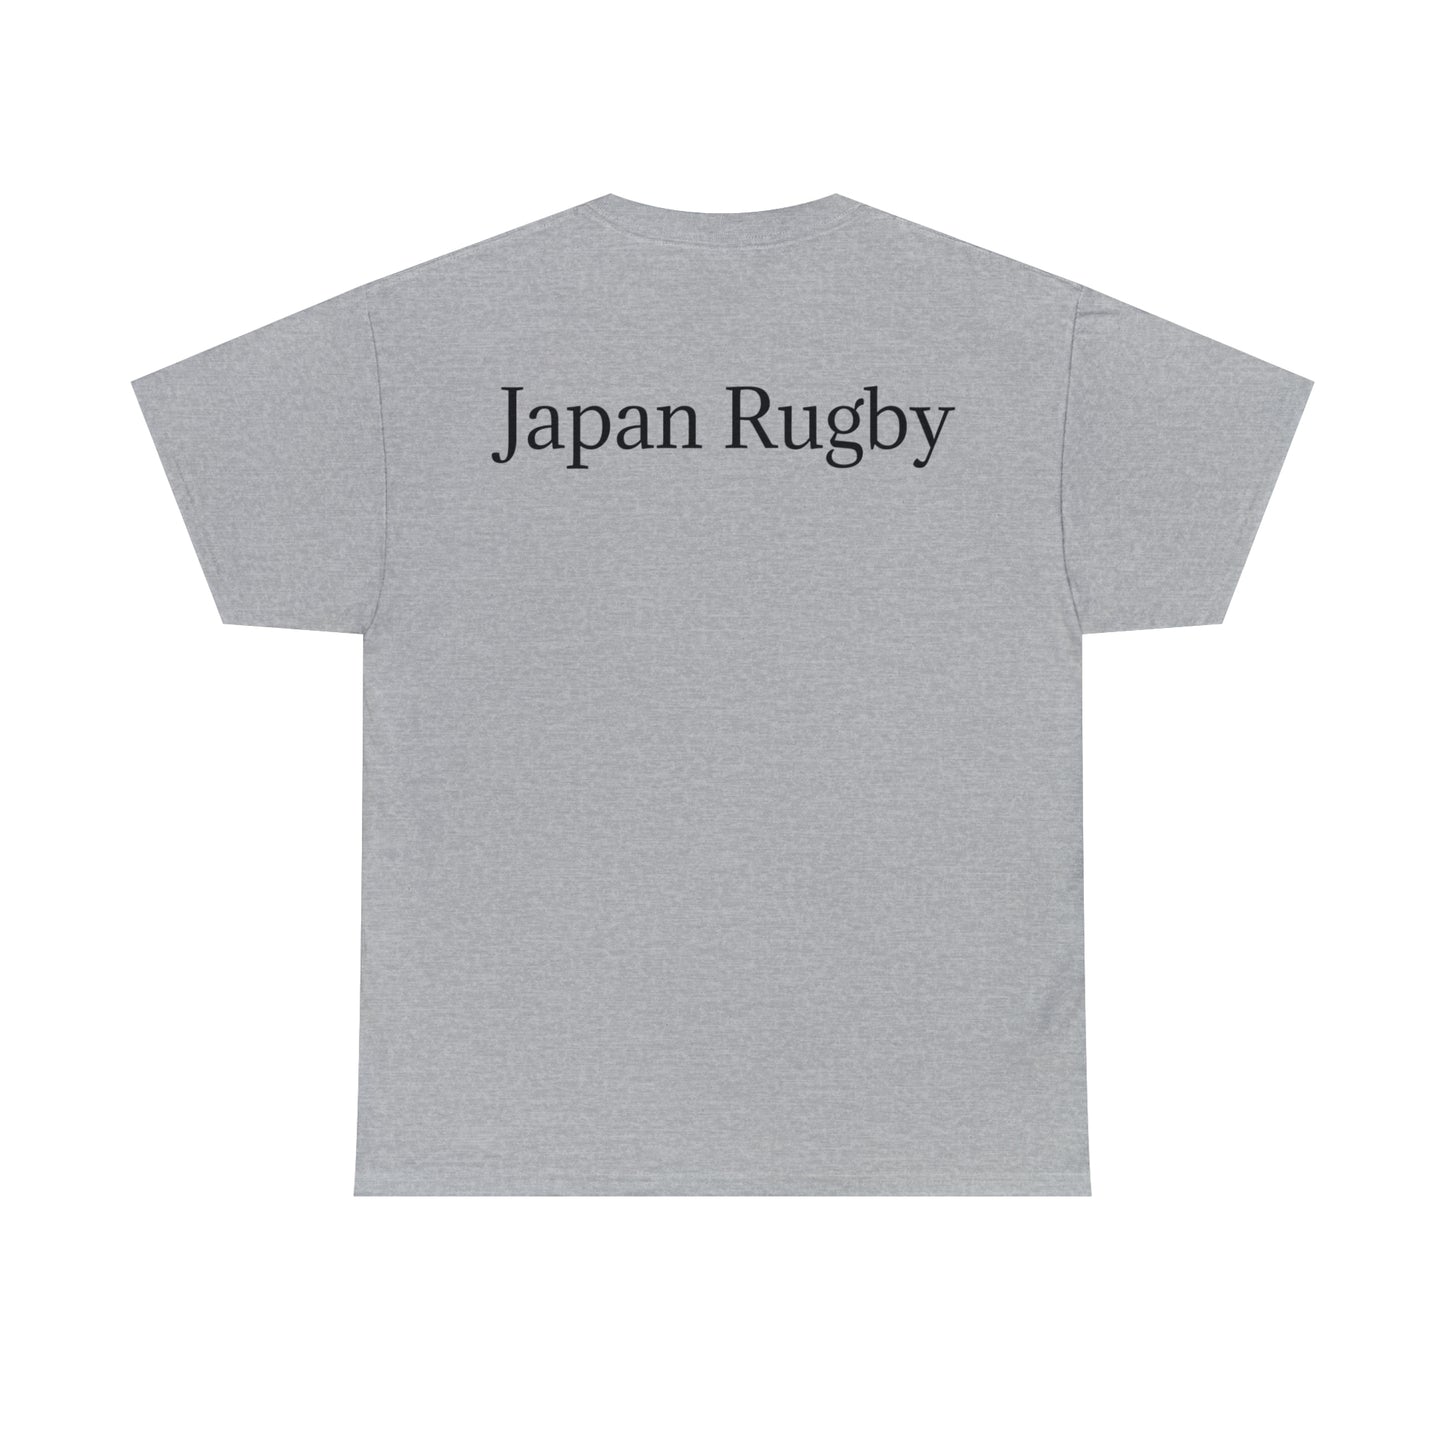 Post Match Japan - light shirts